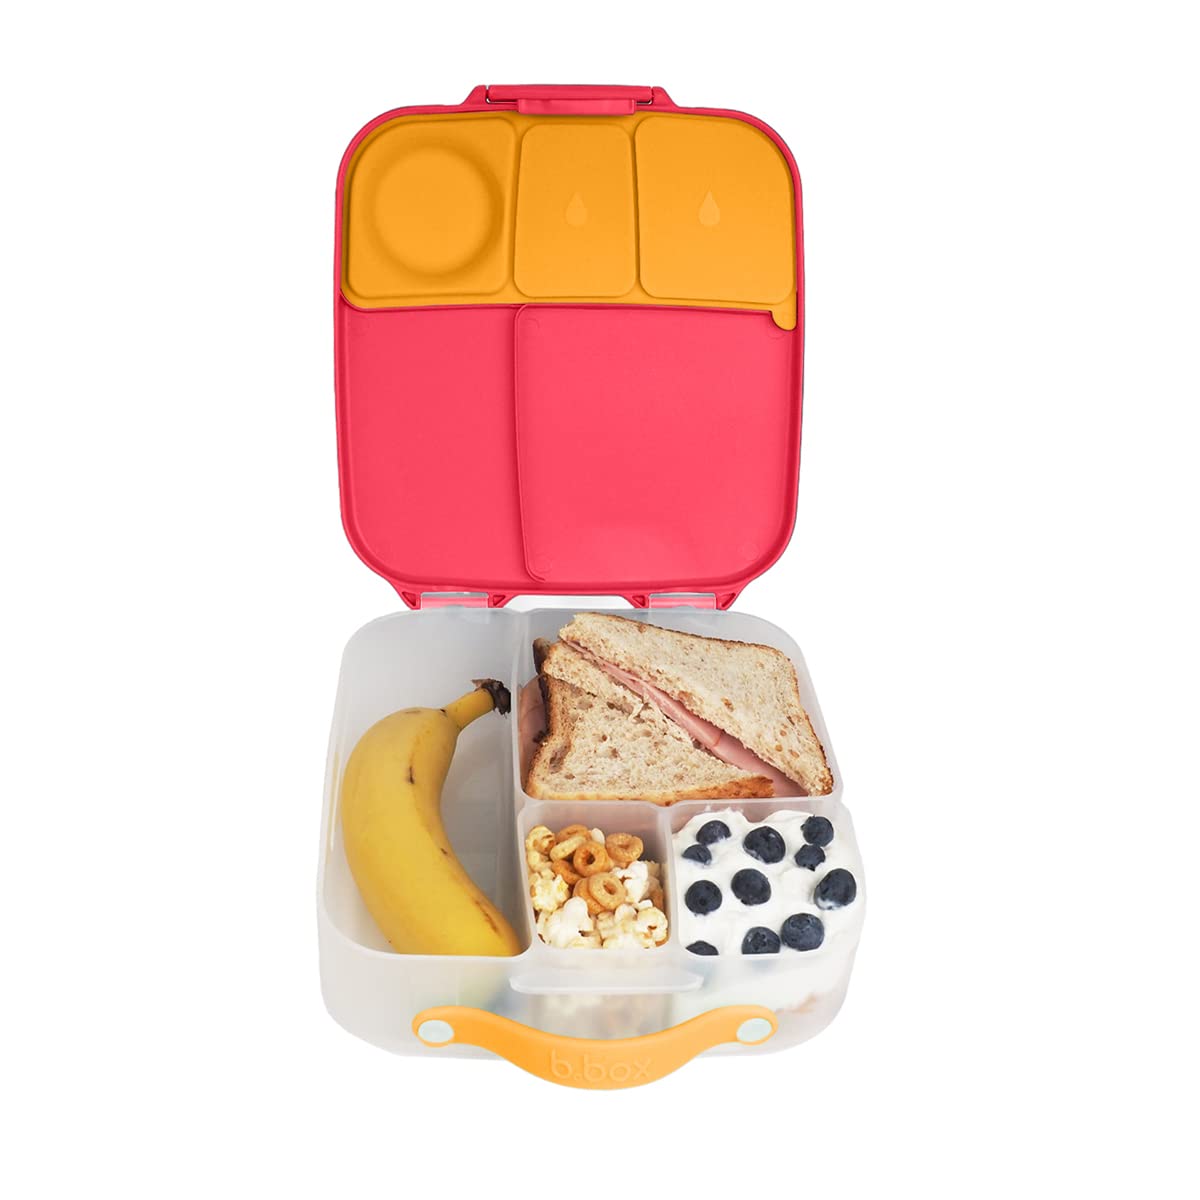 B.Box Bento Lunchbox for Kids Food.